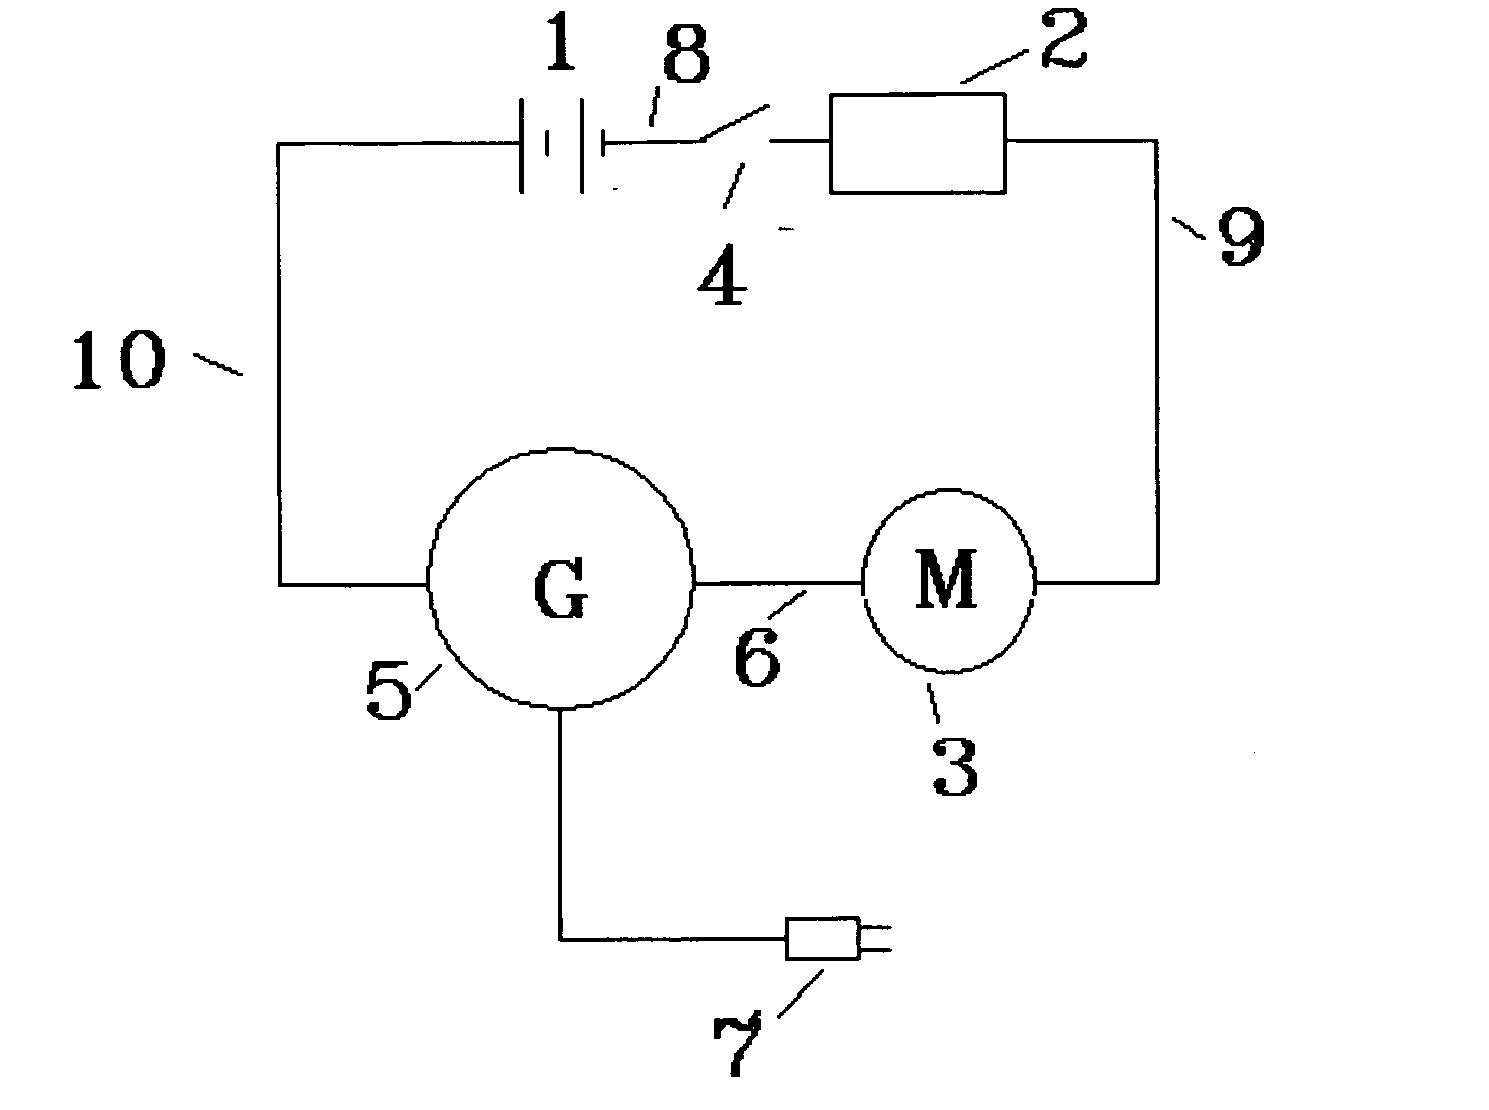 Generator system